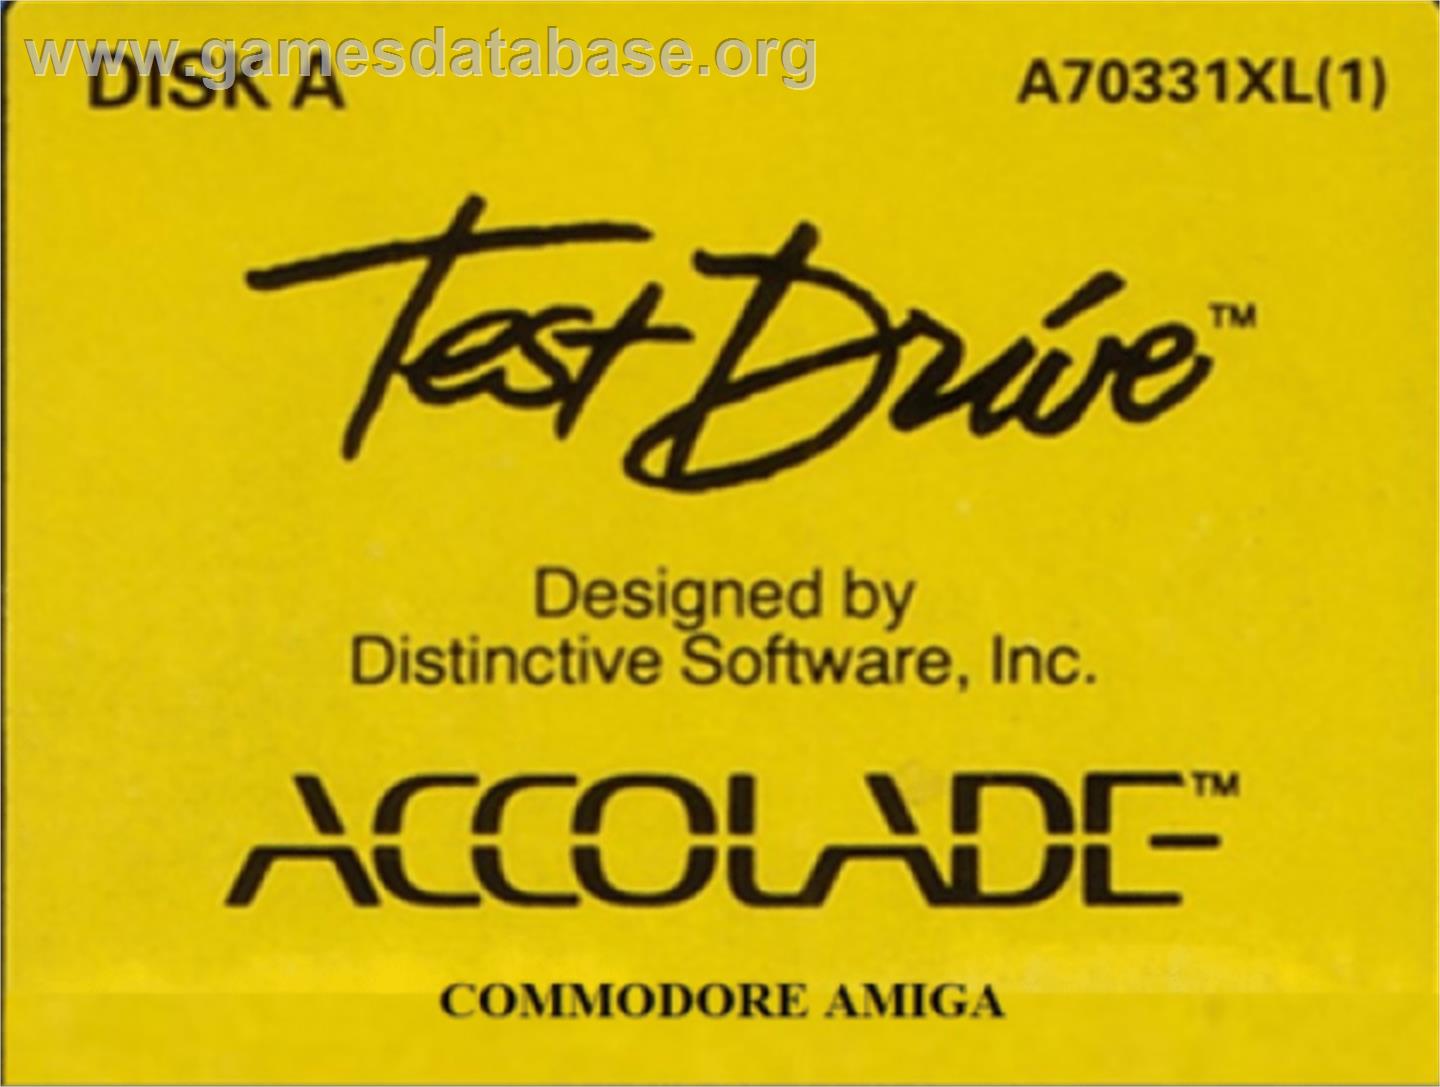 Test Drive - Commodore Amiga - Artwork - Cartridge Top